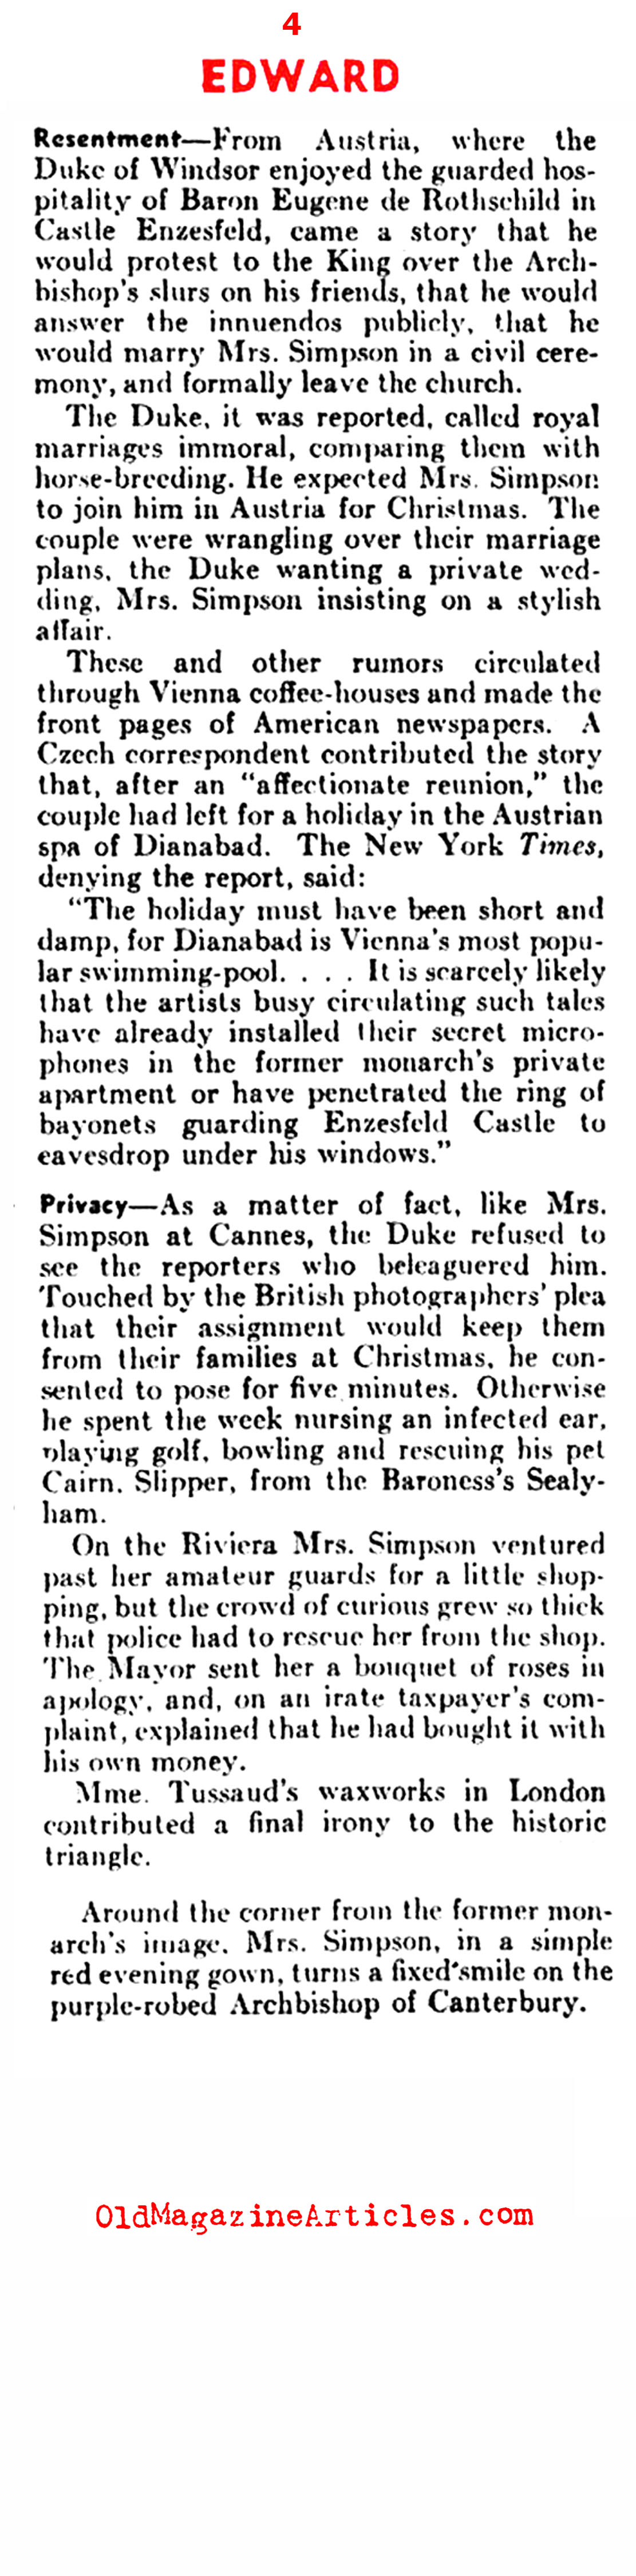 The Boyhood of the Duke of Windsor (Literary Digest, 1936)